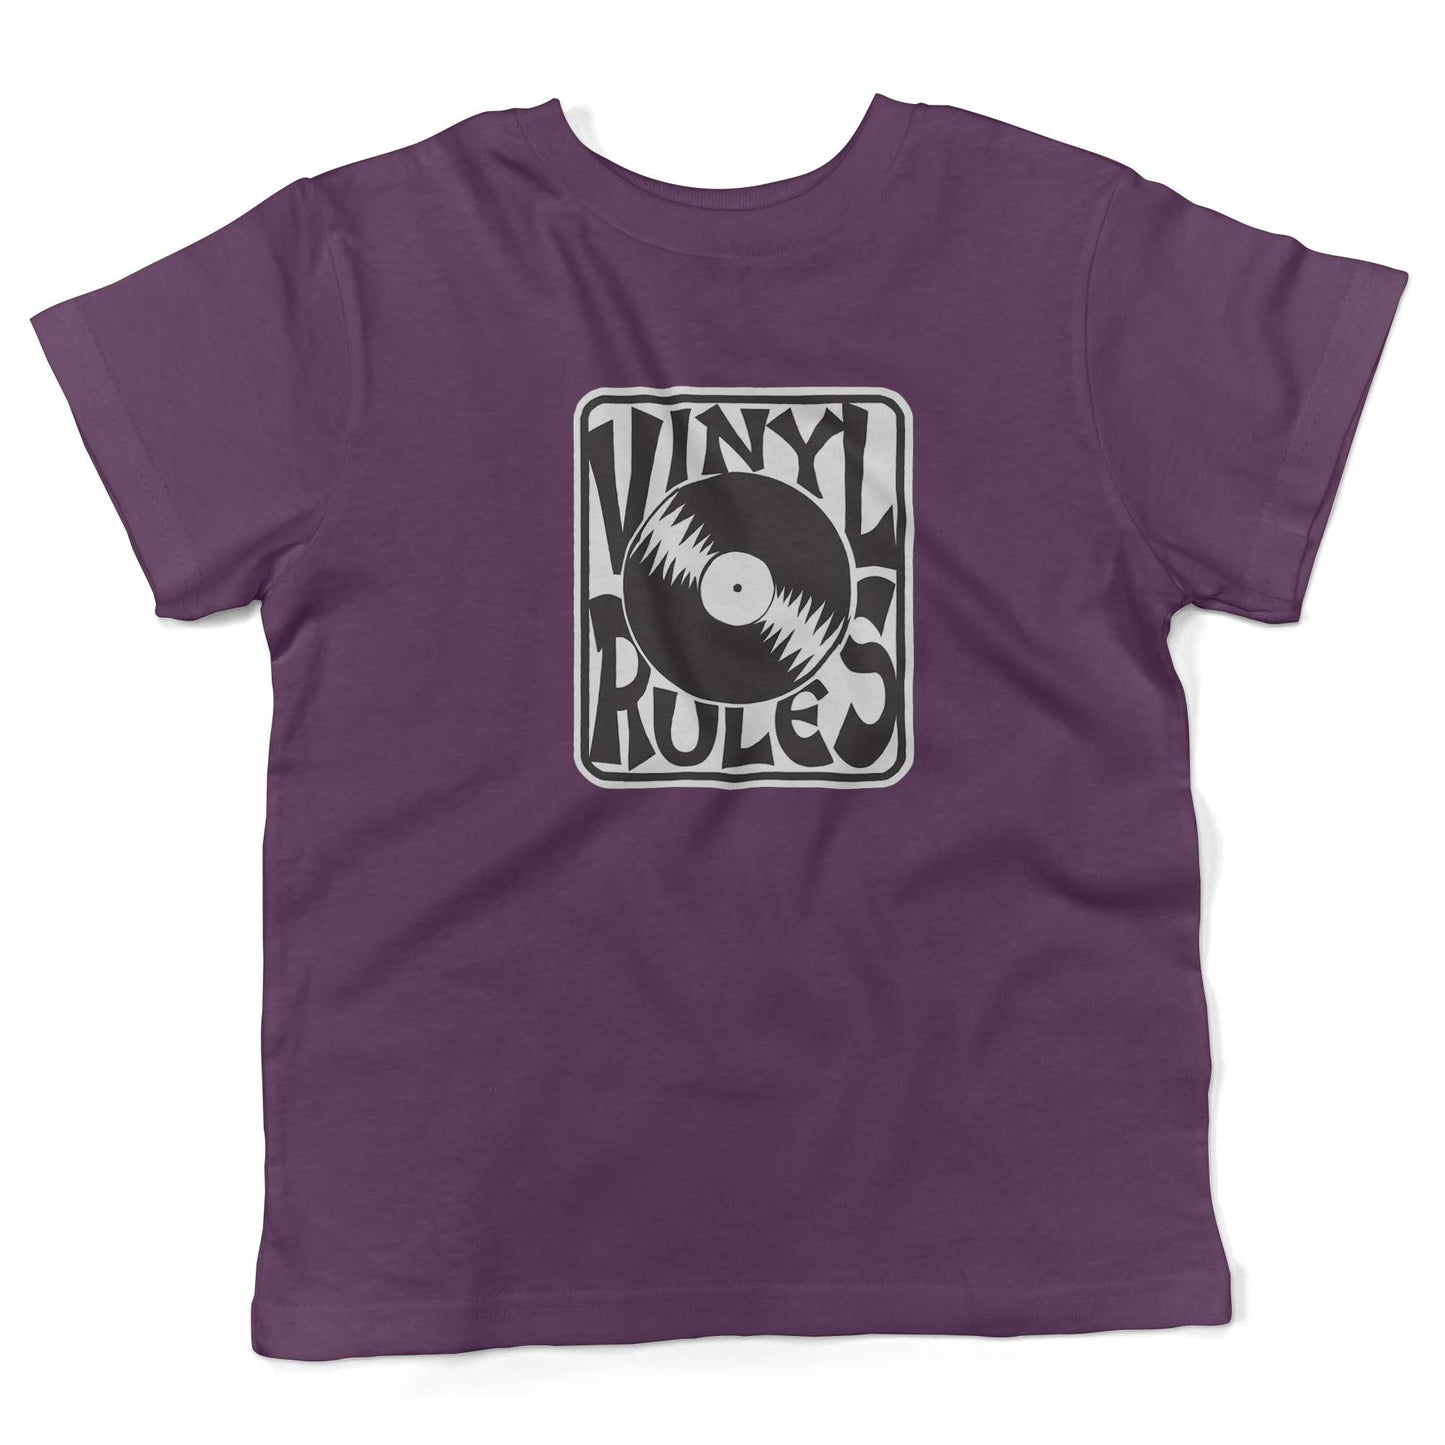 Vinyl Rules Toddler Shirt-Organic Purple-2T